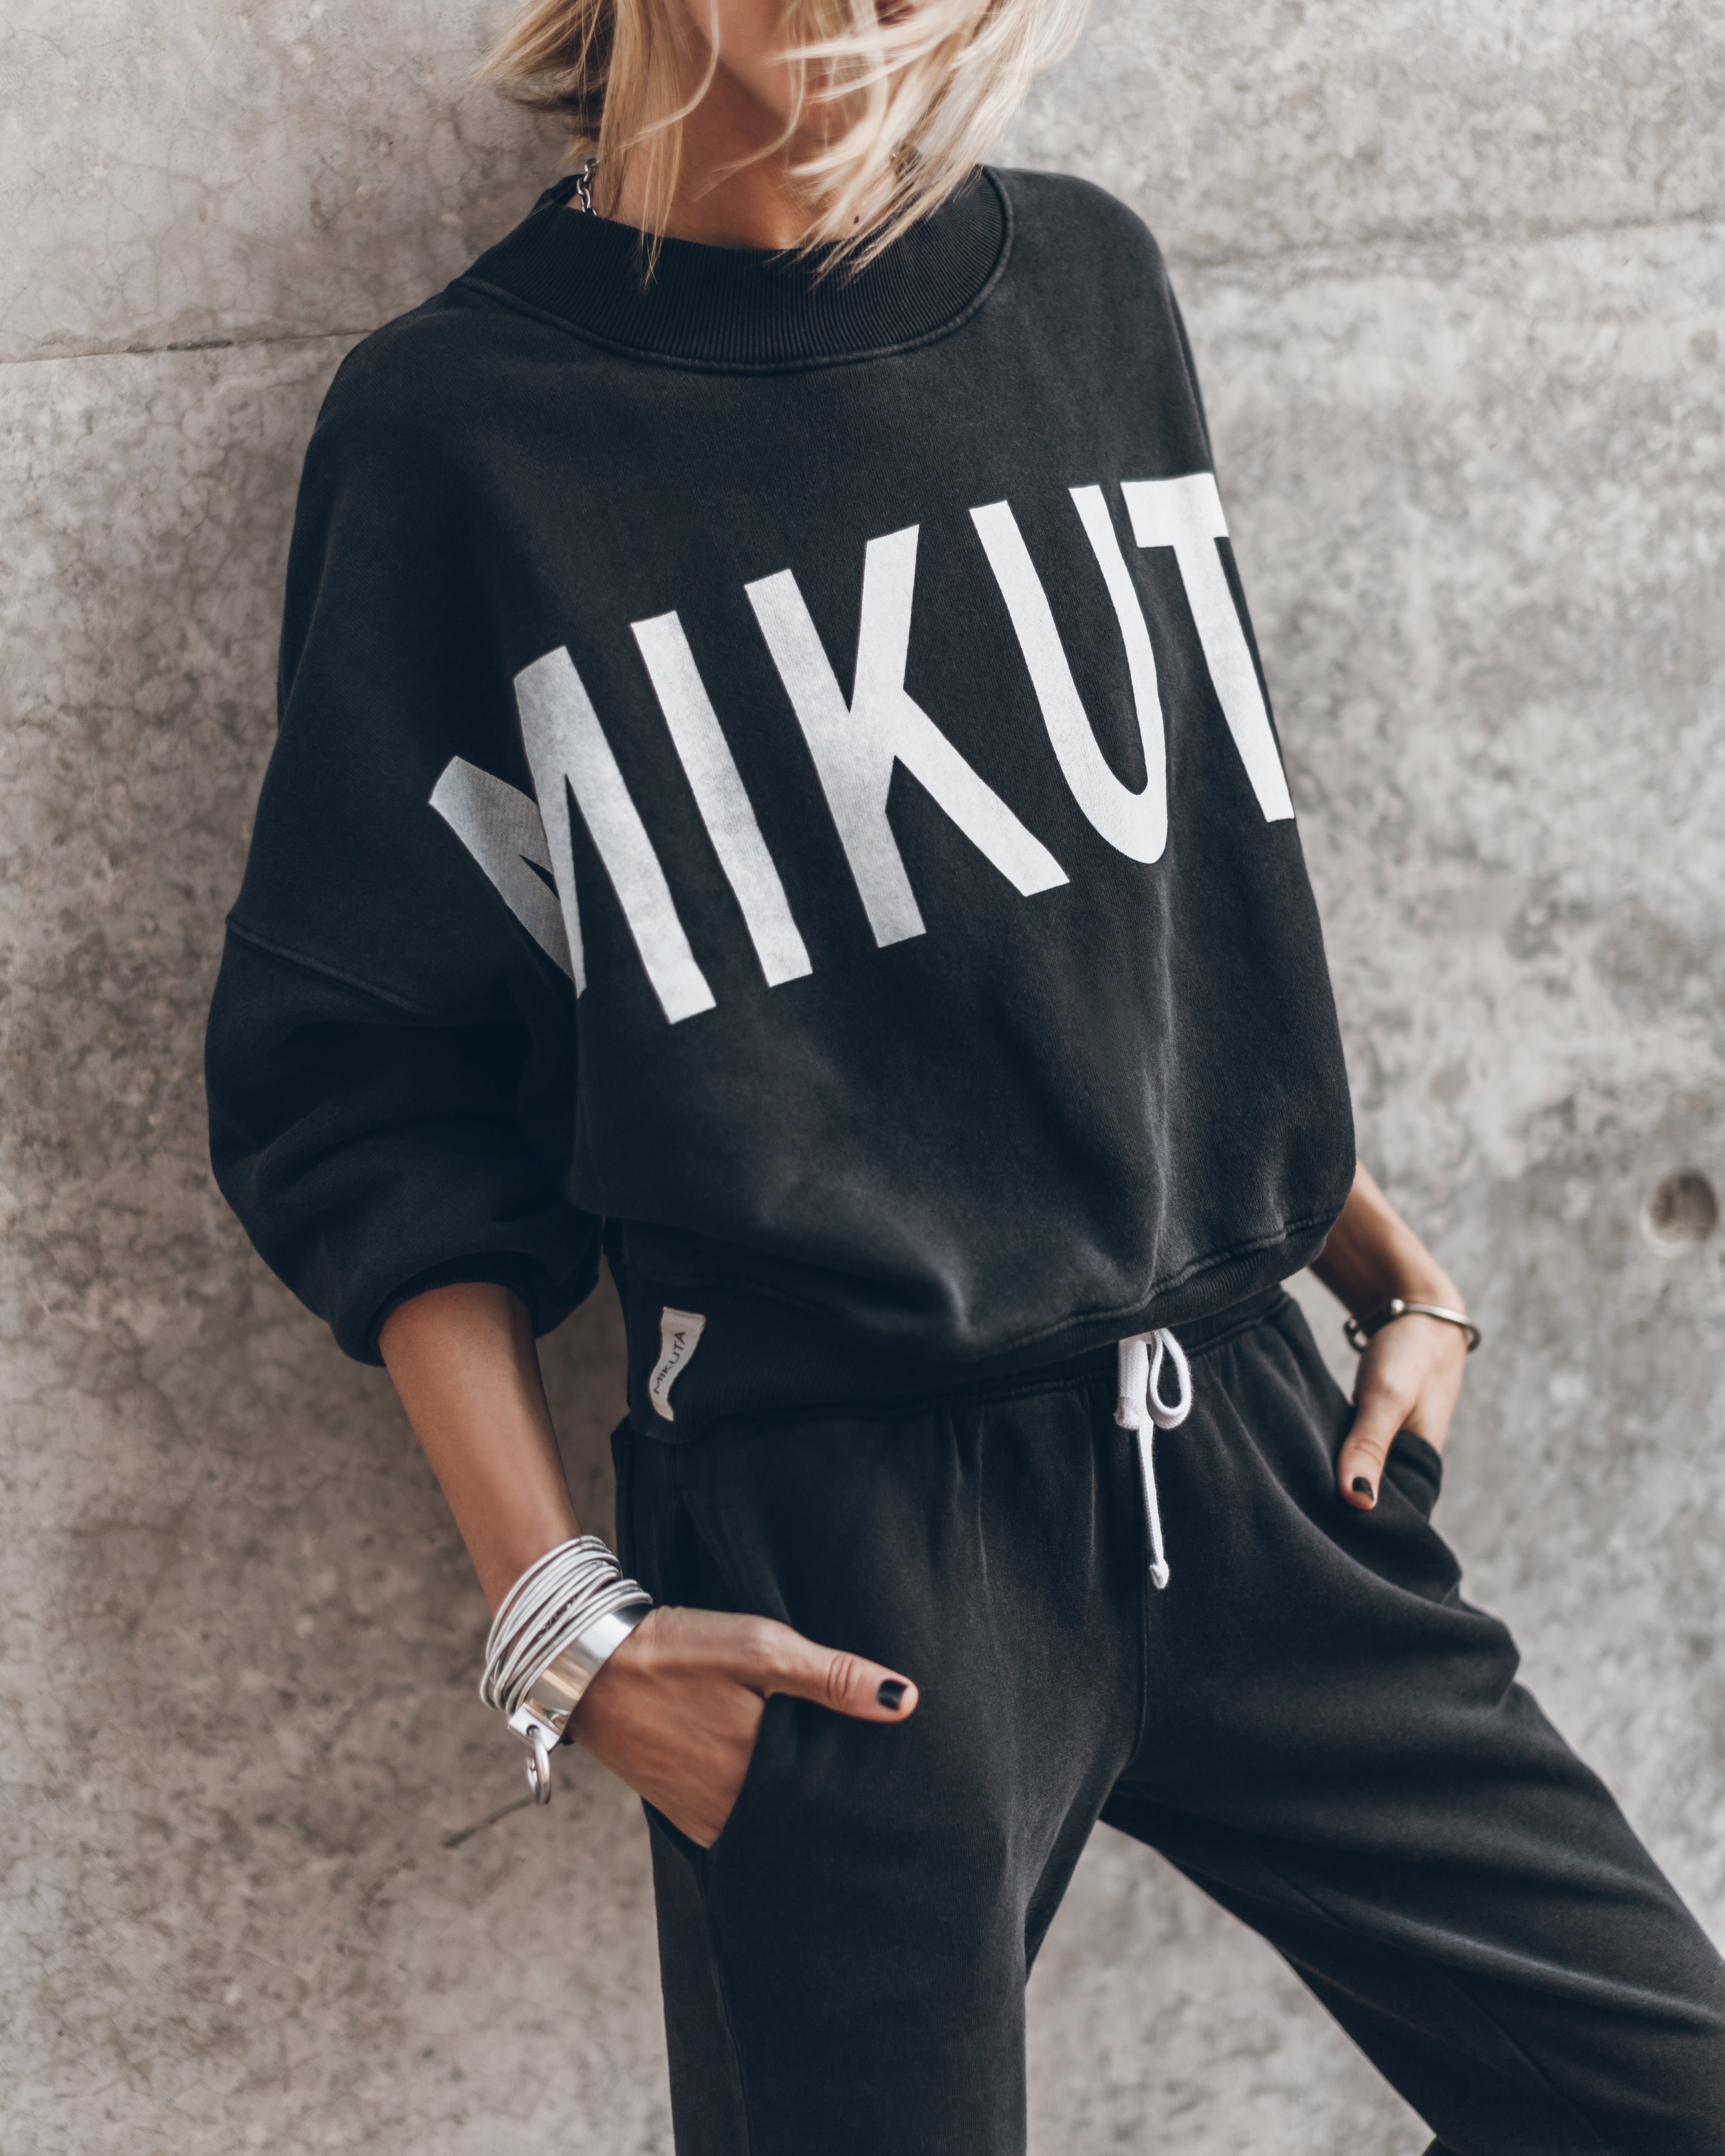 The Black Mikuta Sweater